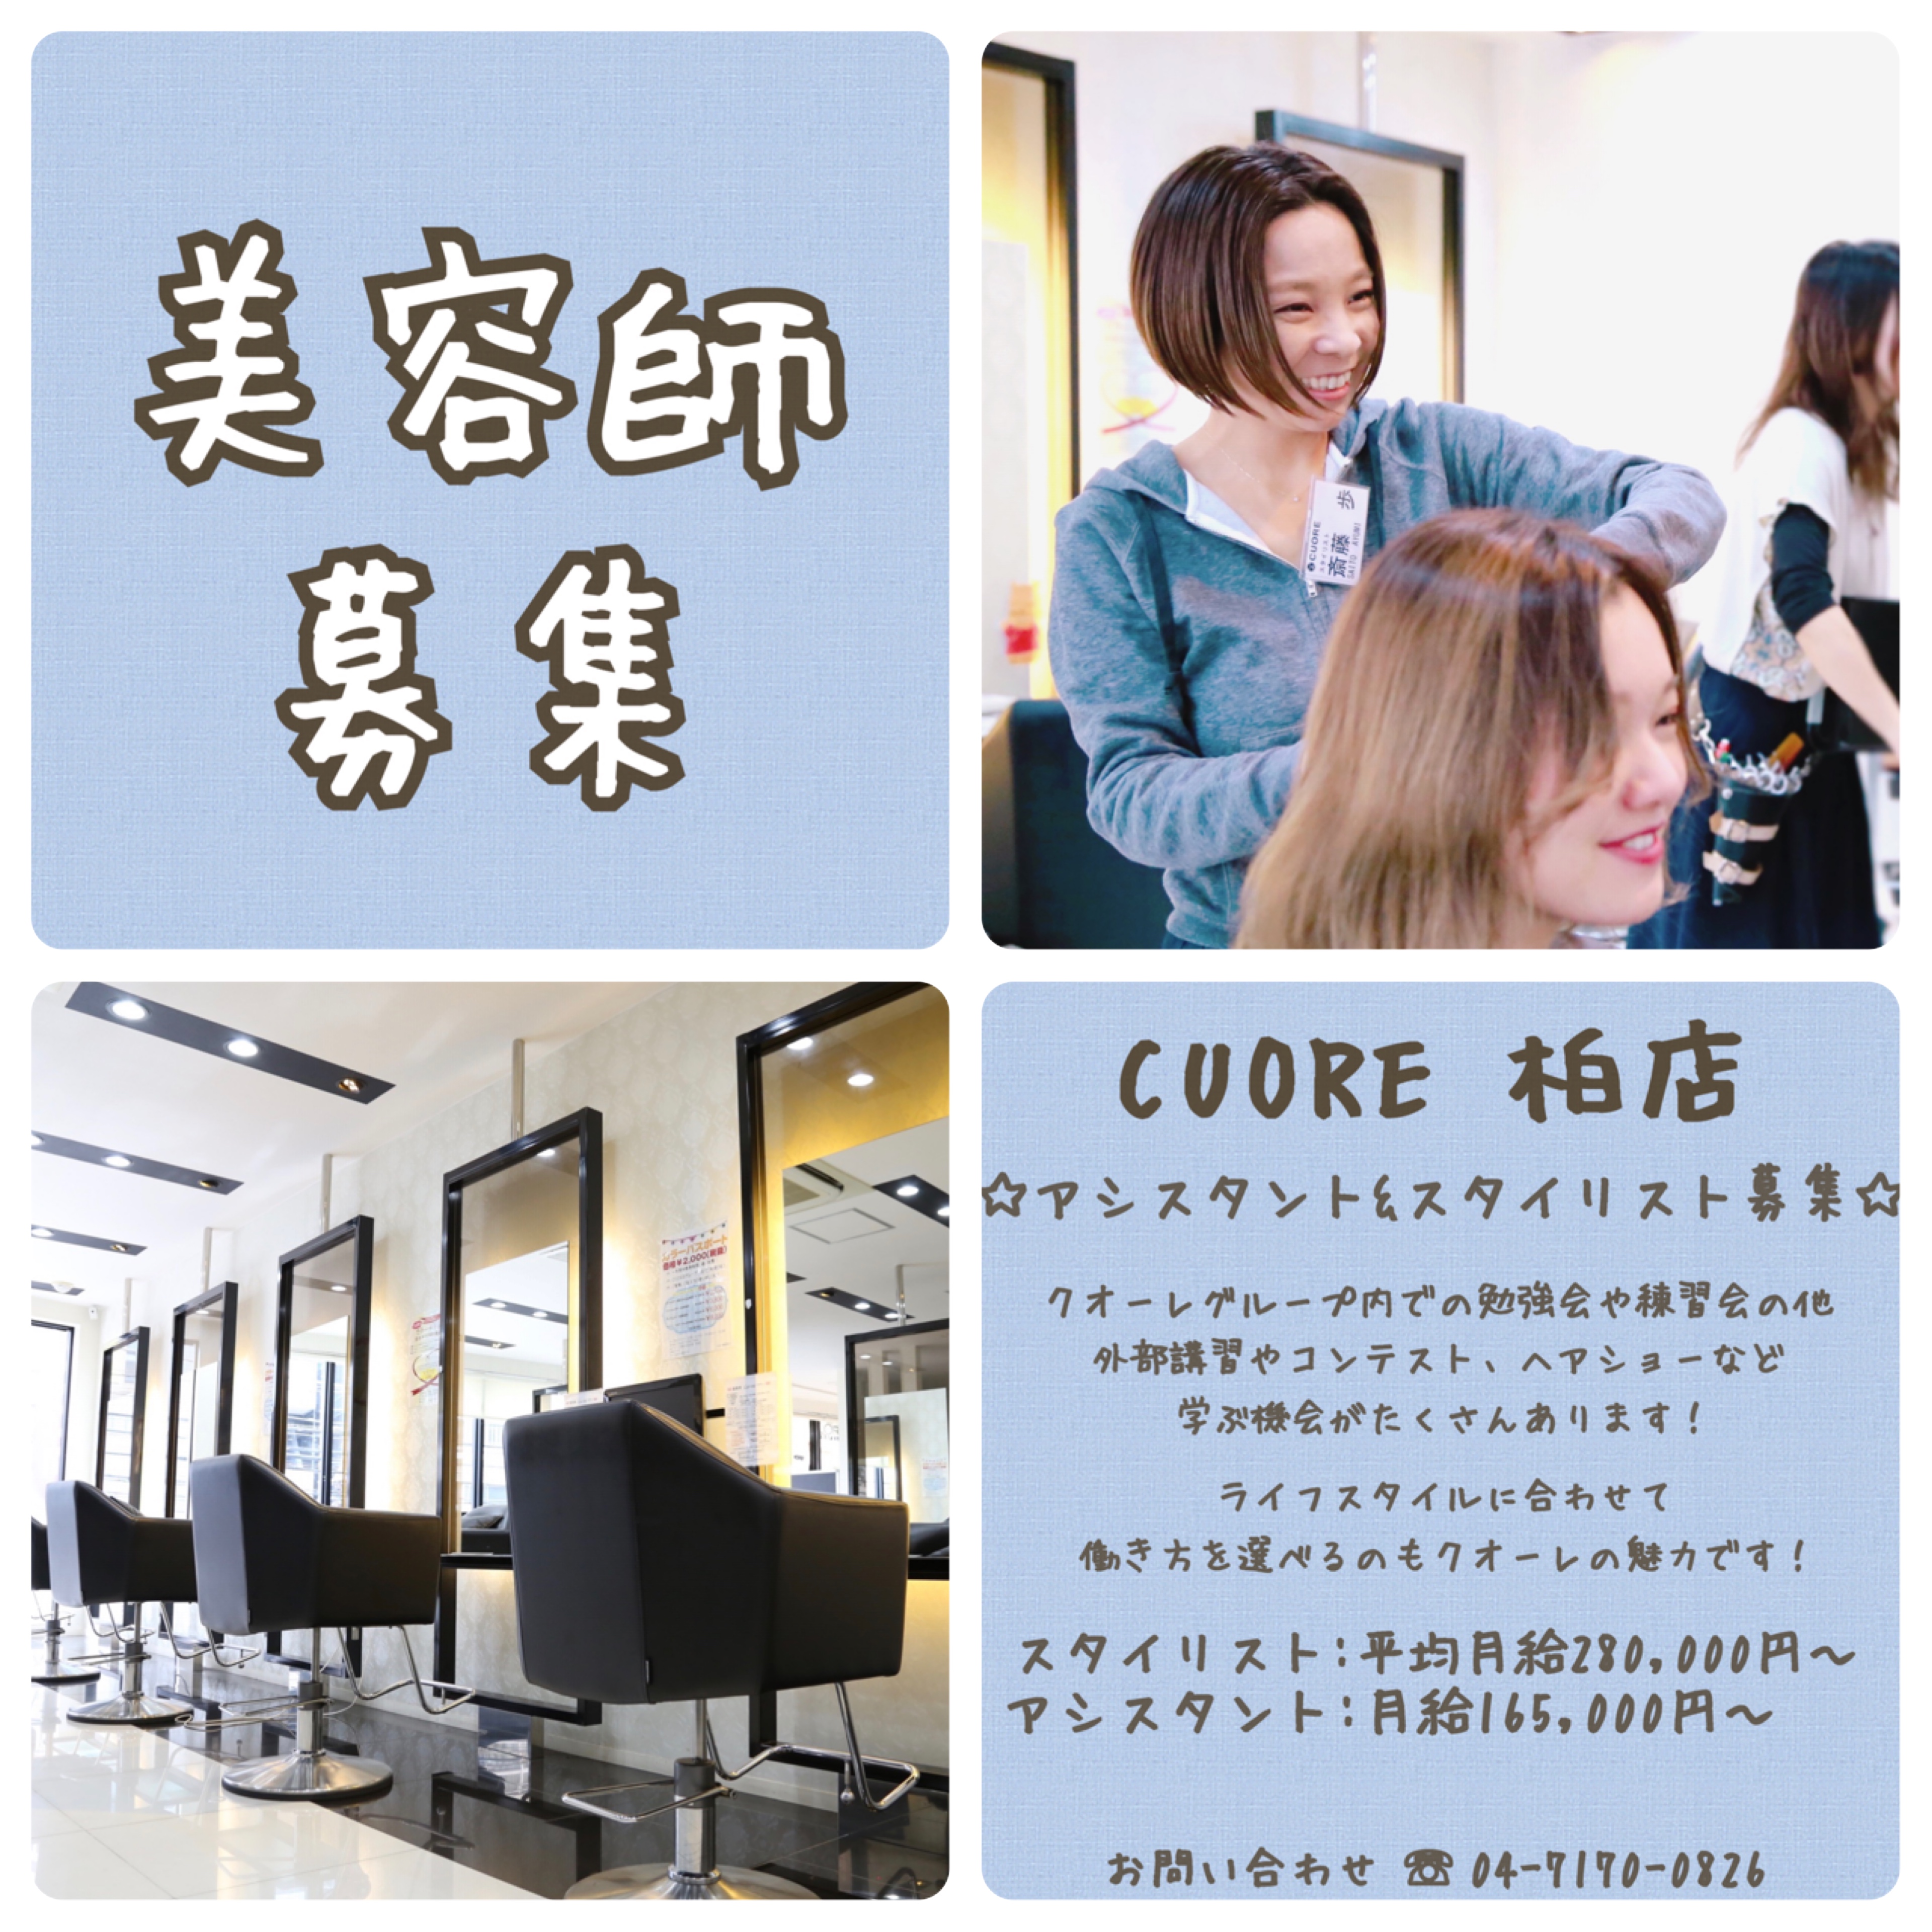 Cuore我孫子店 スタッフ募集 トピックス 千葉 東京 茨城の美容室 美容師の求人は クオーレプランニング